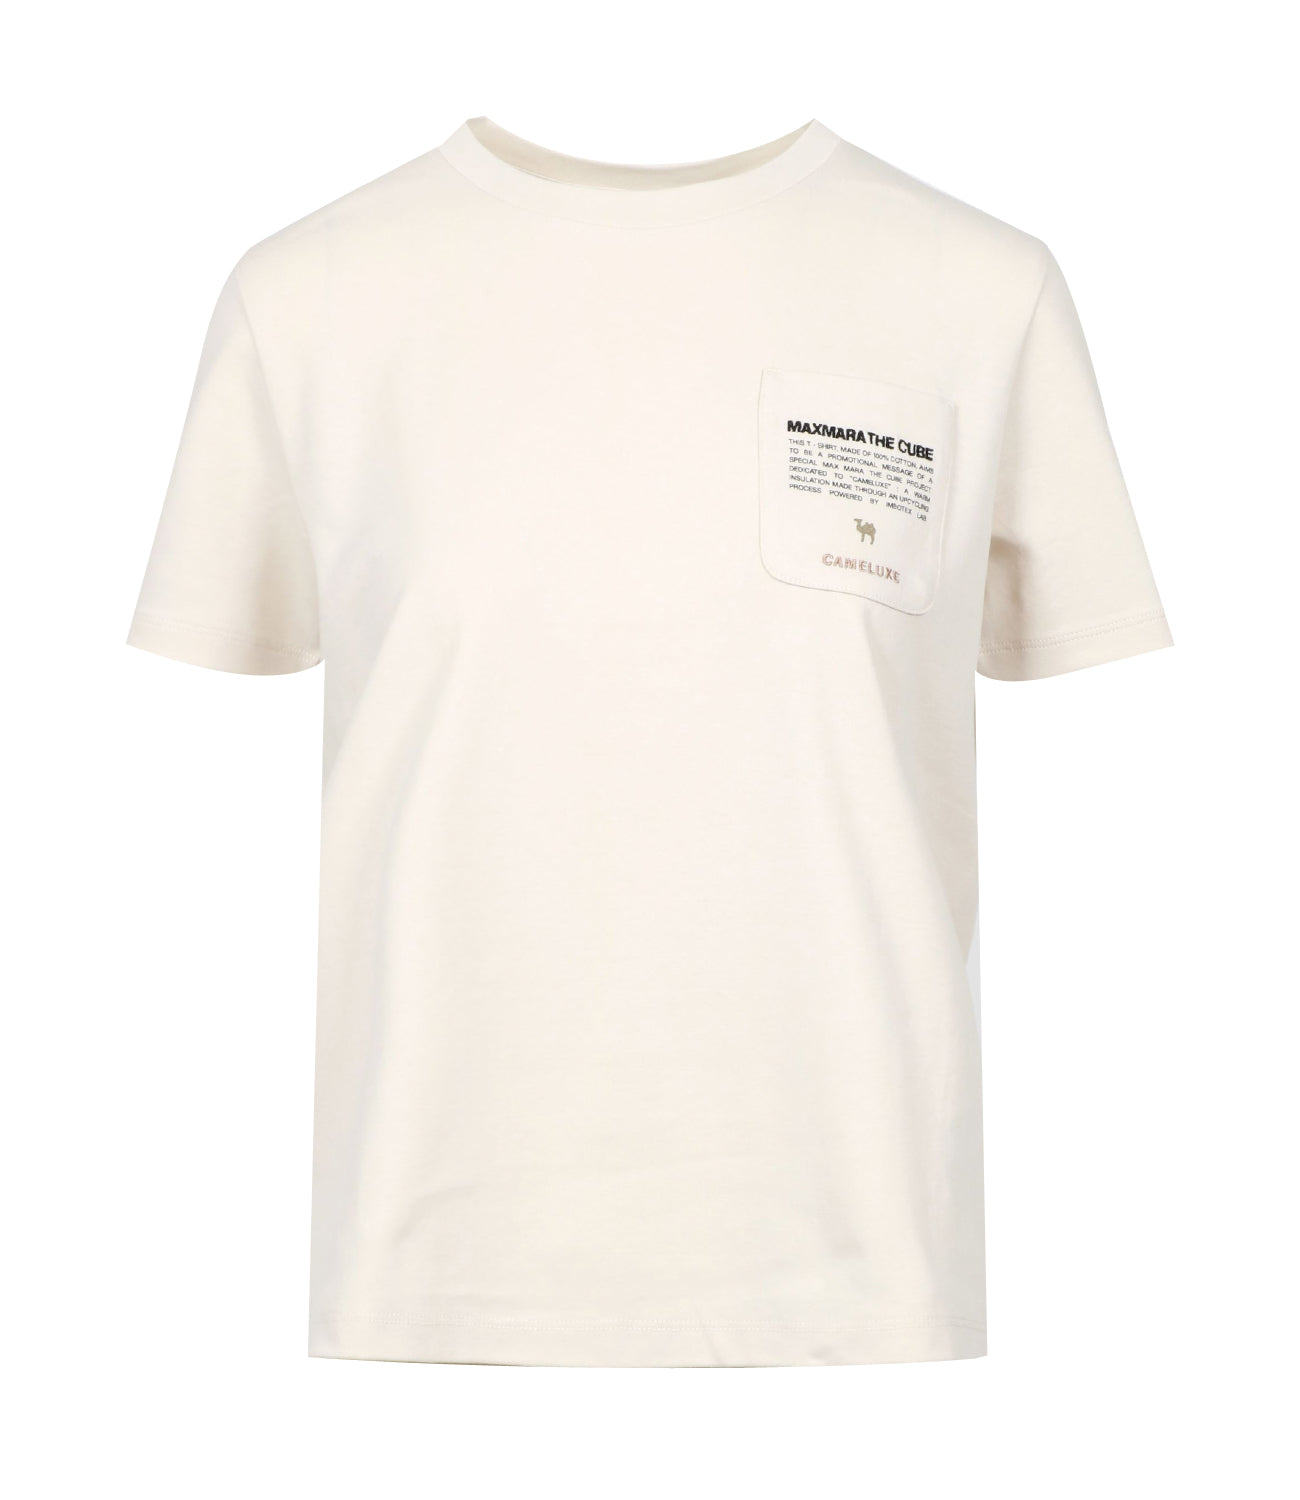 Max Mara The Cube | White T-Shirt